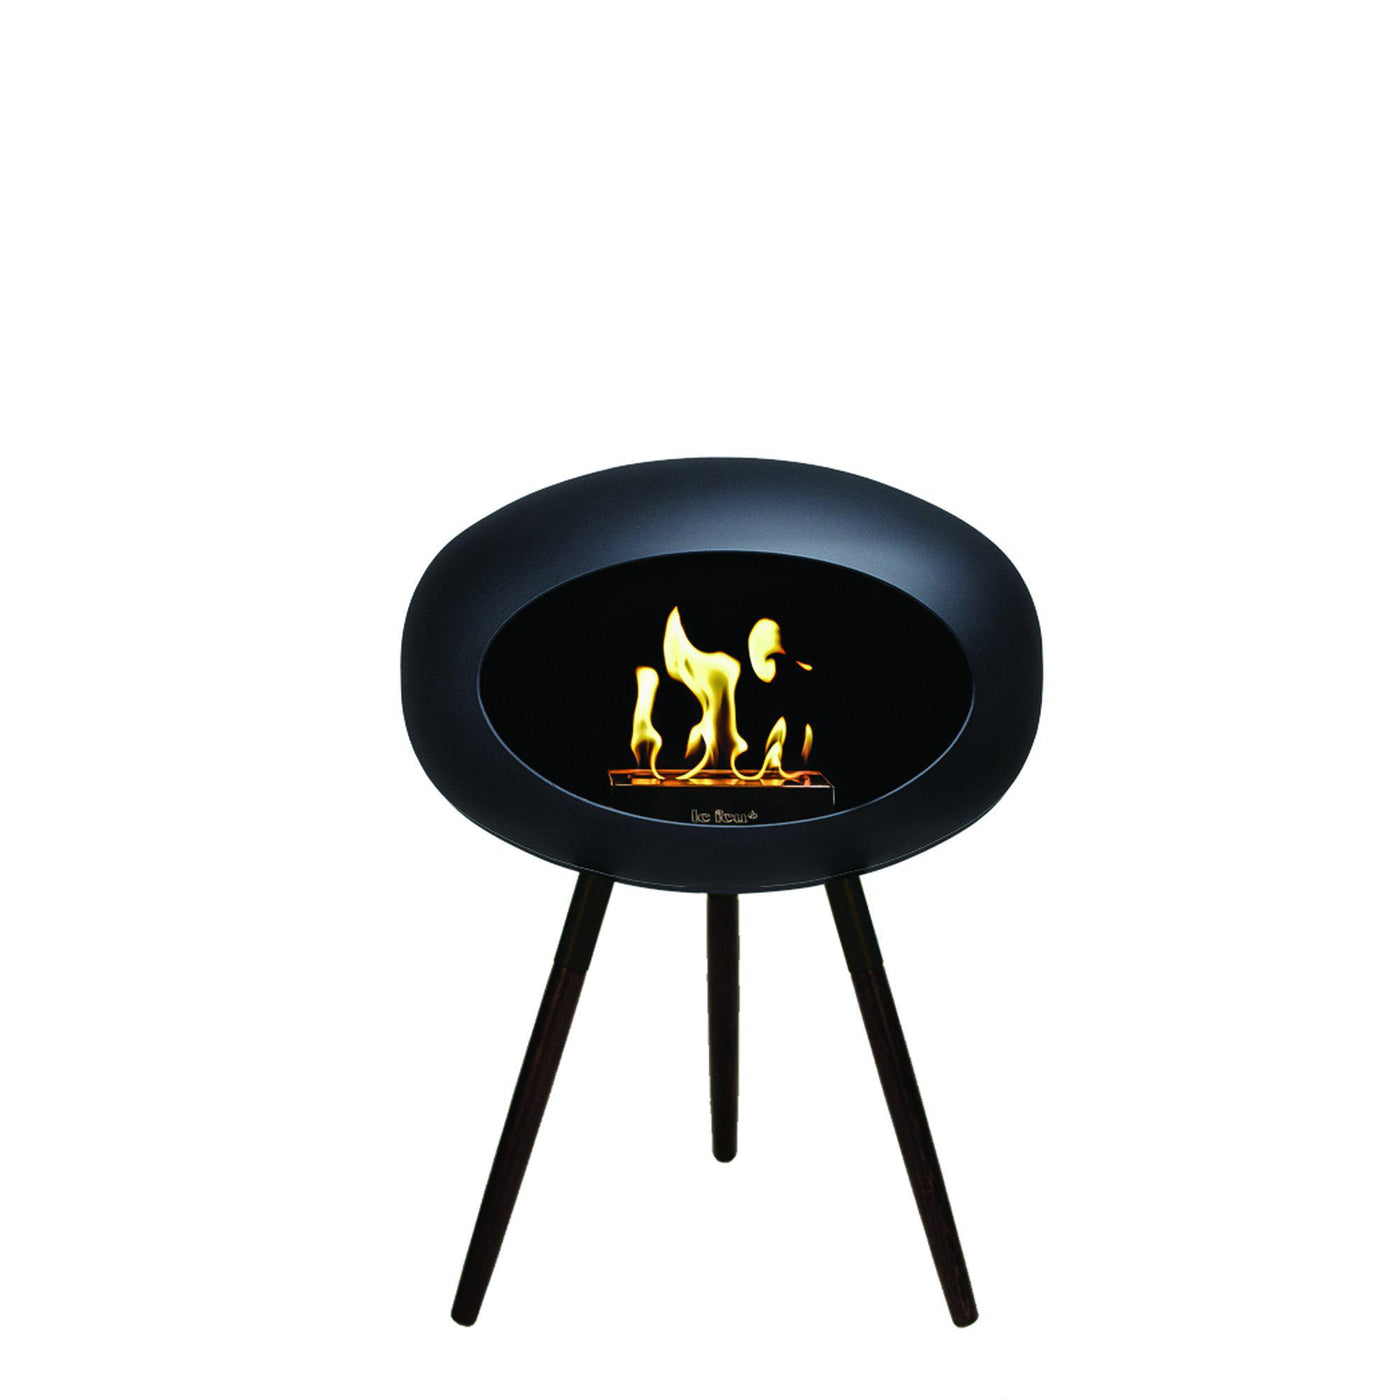 LE FEU Ground Low Bio fireplace Black with Black Saucer Oak Legs